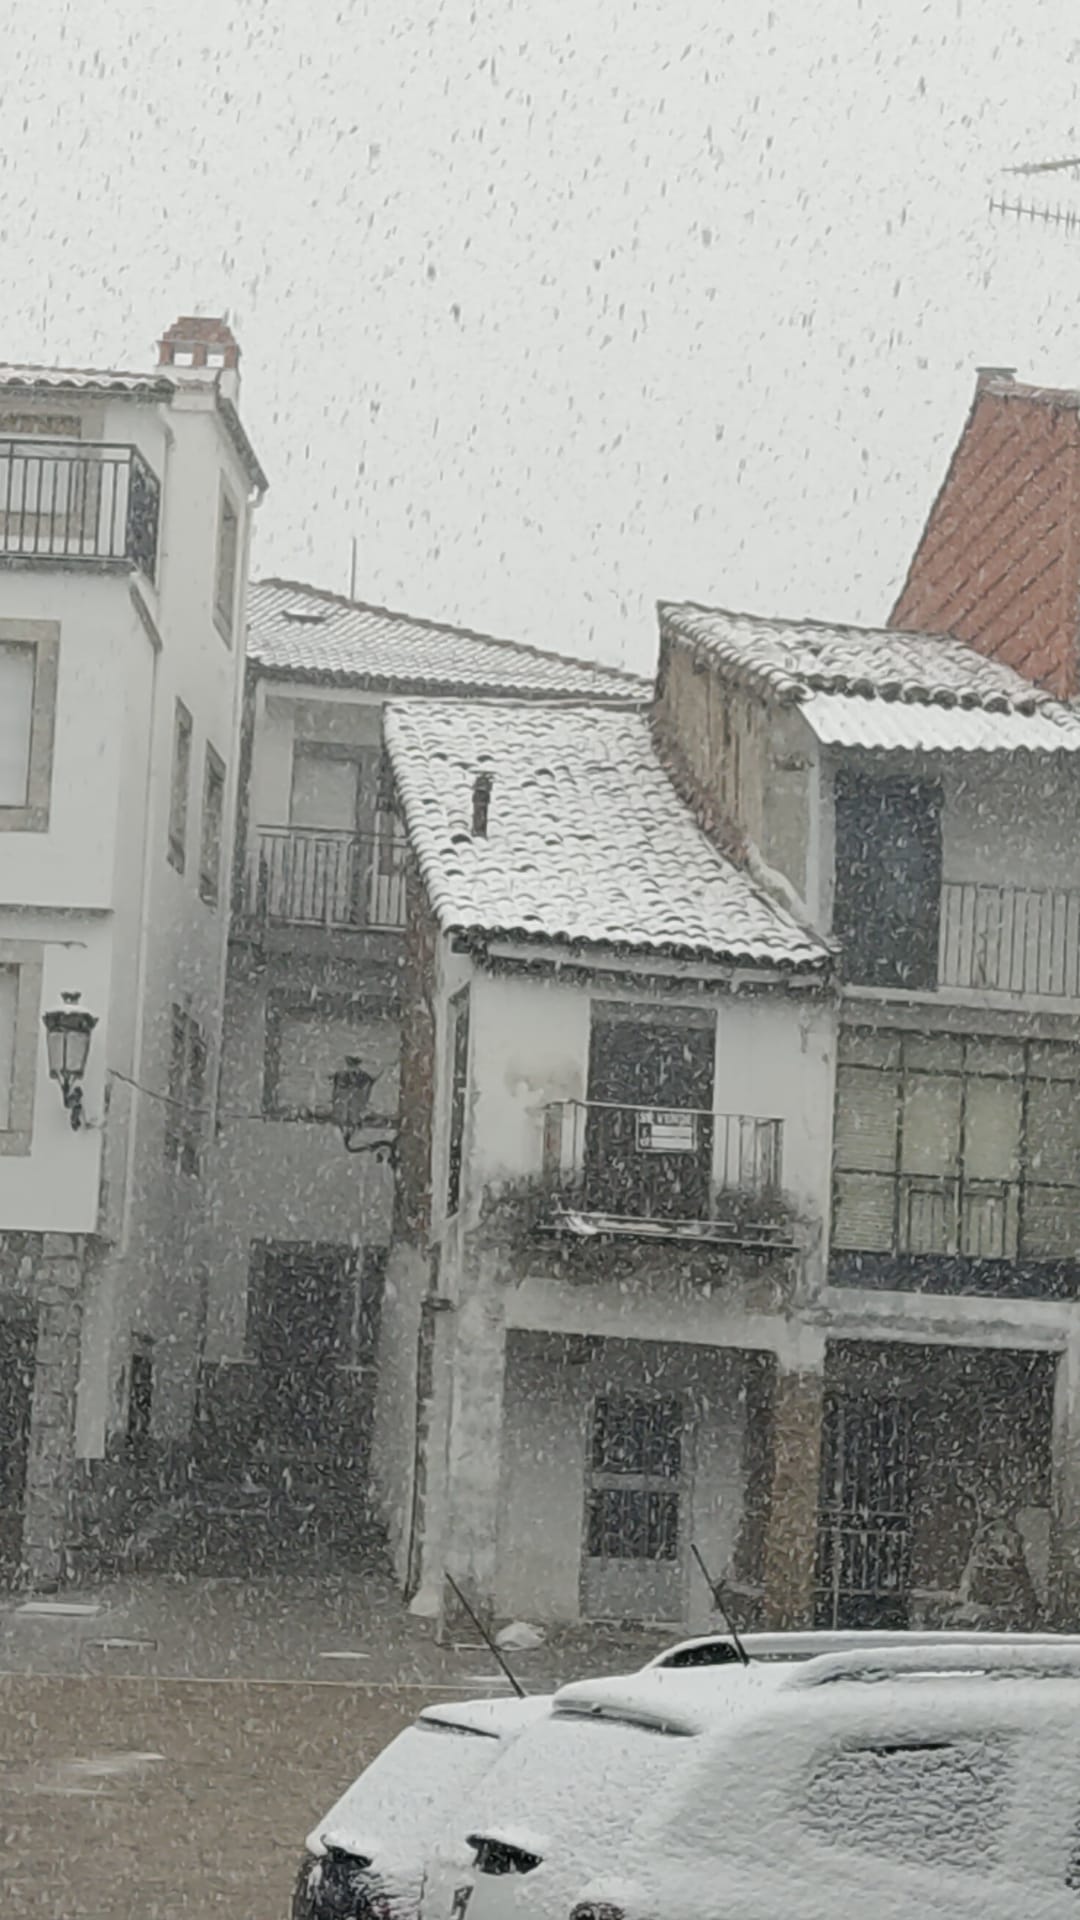 nieve en Extremadura